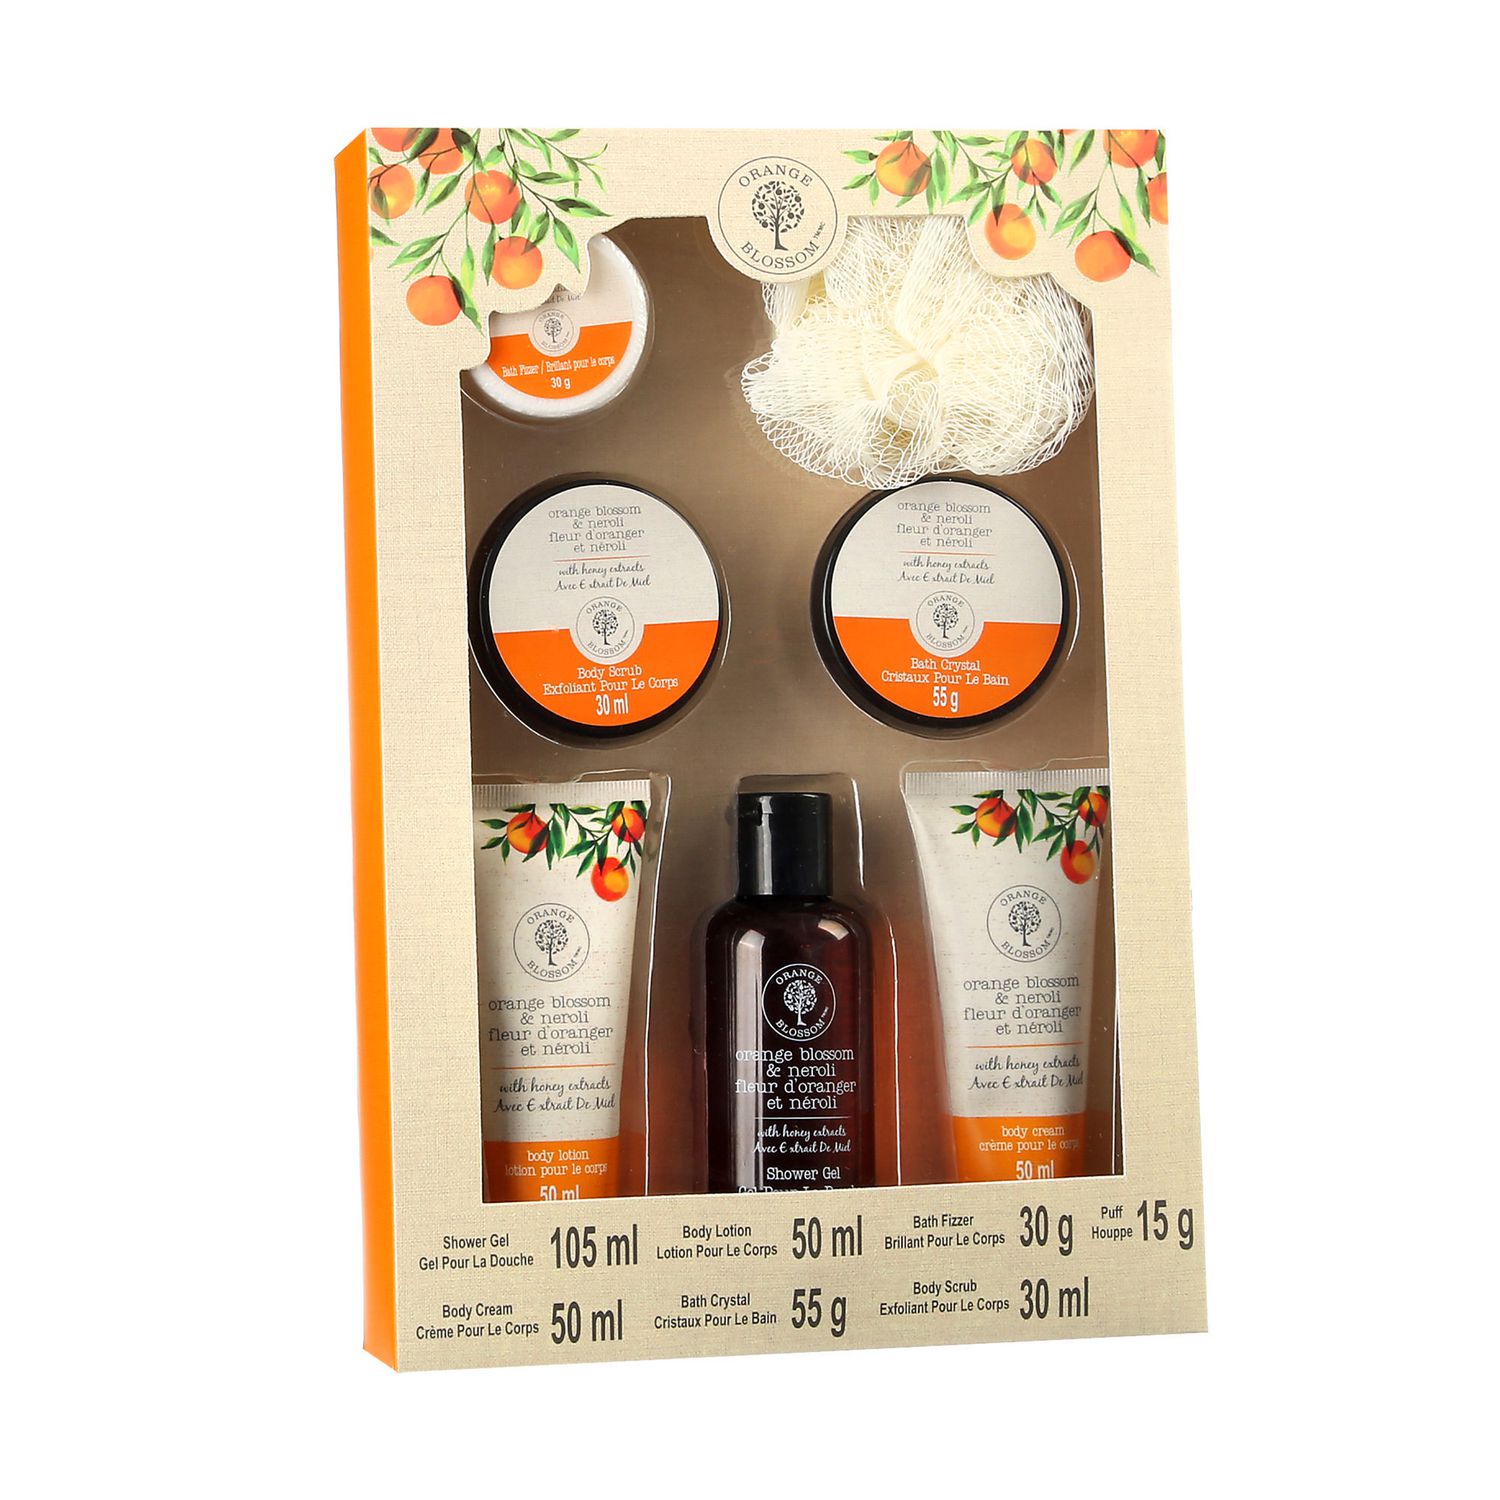 Orange Blossom Bath Gift Set with Honey Extract Essential